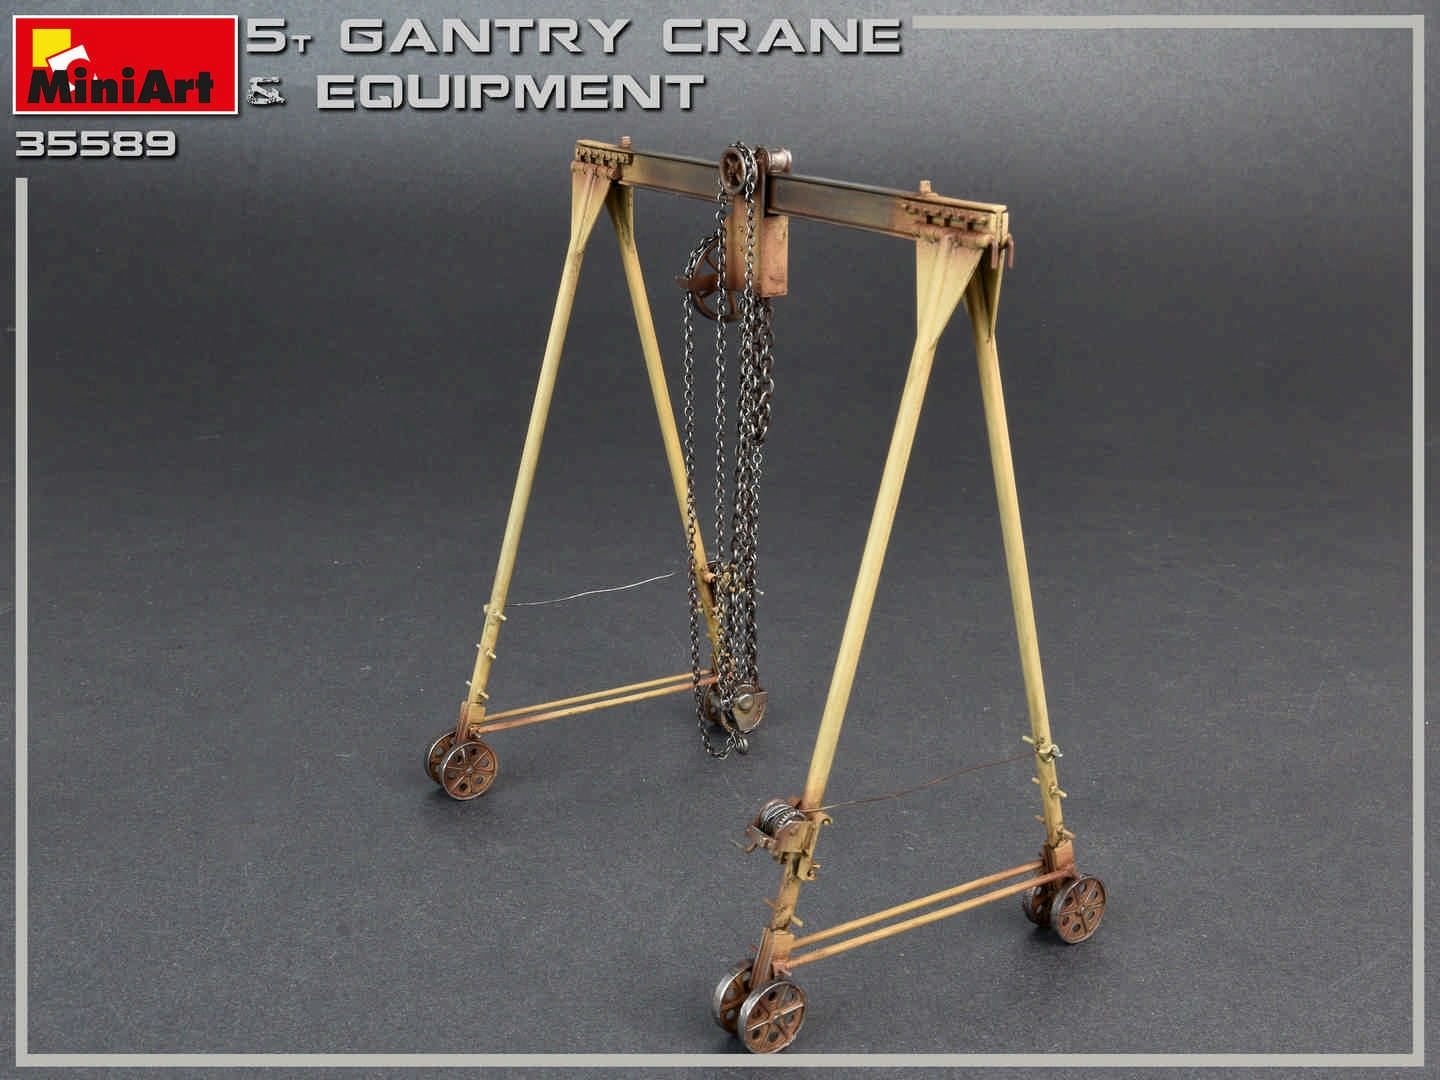 Miniart 1/35th scale 5 Ton gantry Crane & Equipment